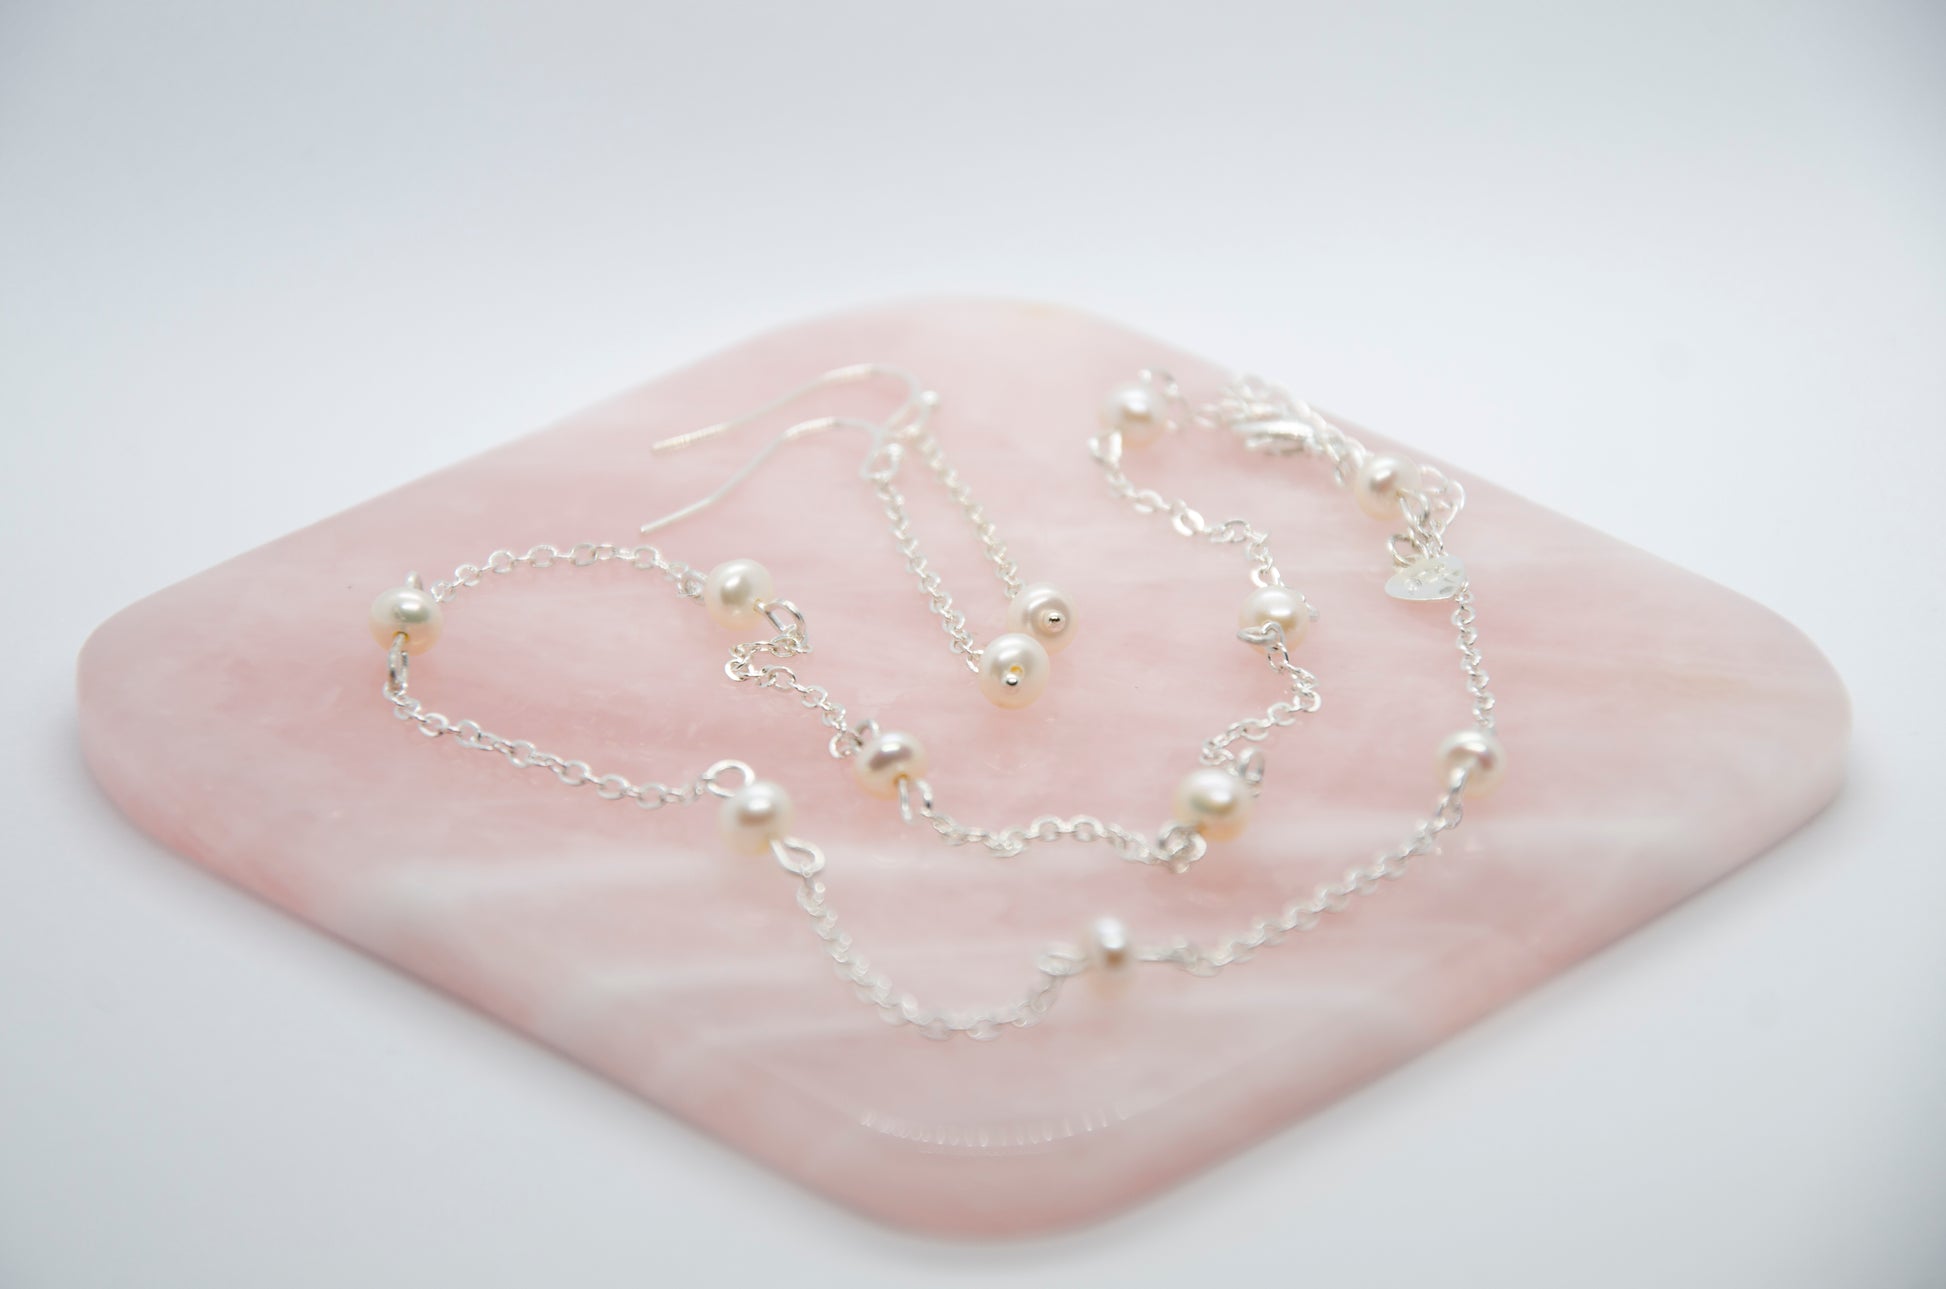 Rose Quartz Jewelry Plate